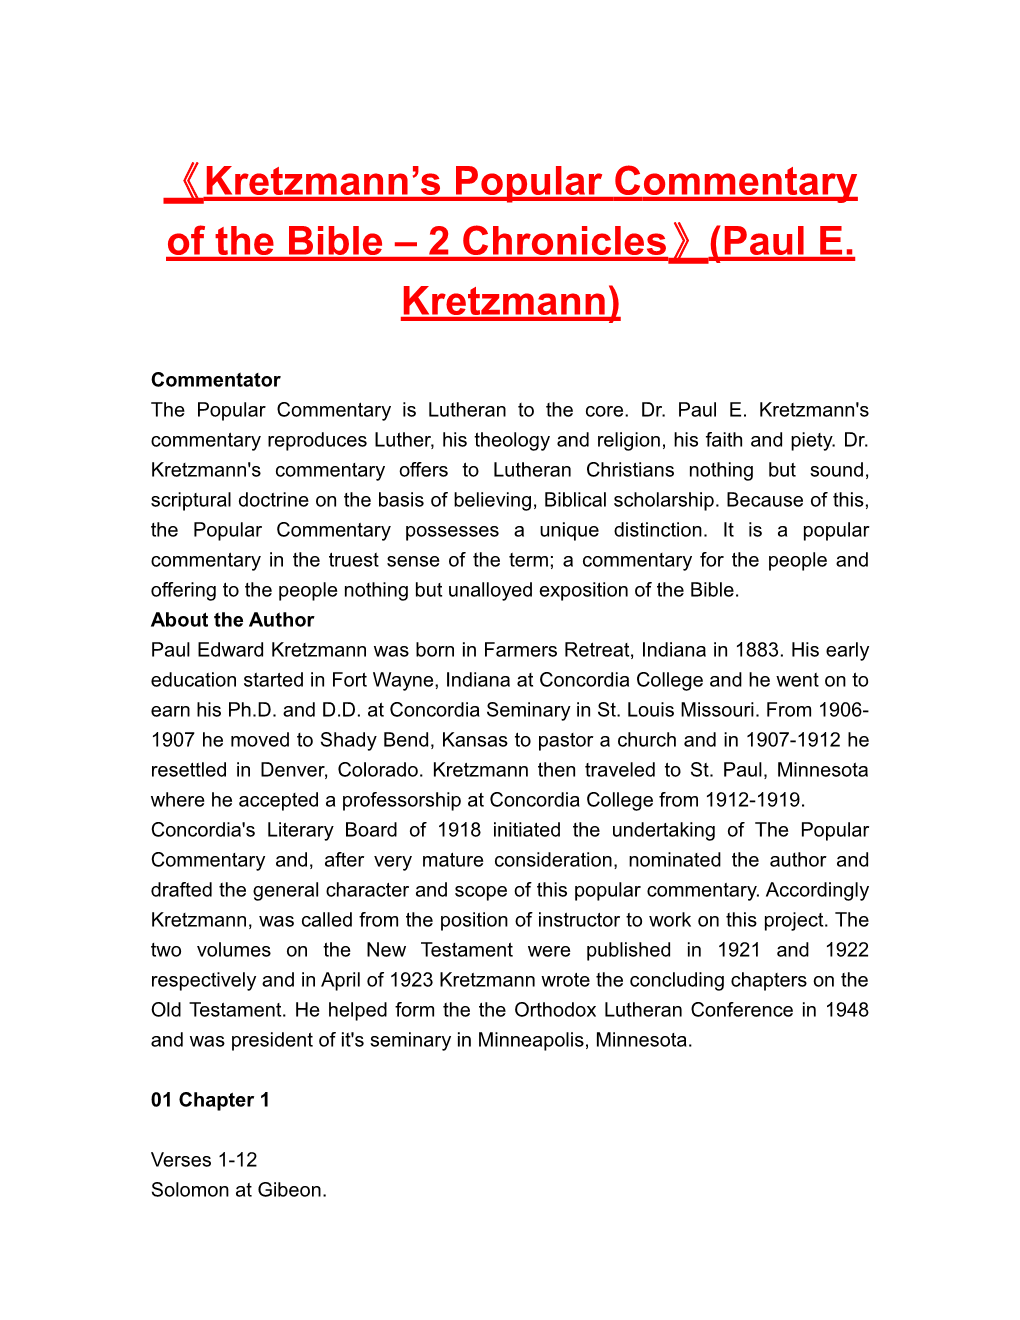 Kretzmann S Popularcommentary of the Bible 2 Chronicles (Paul E. Kretzmann)